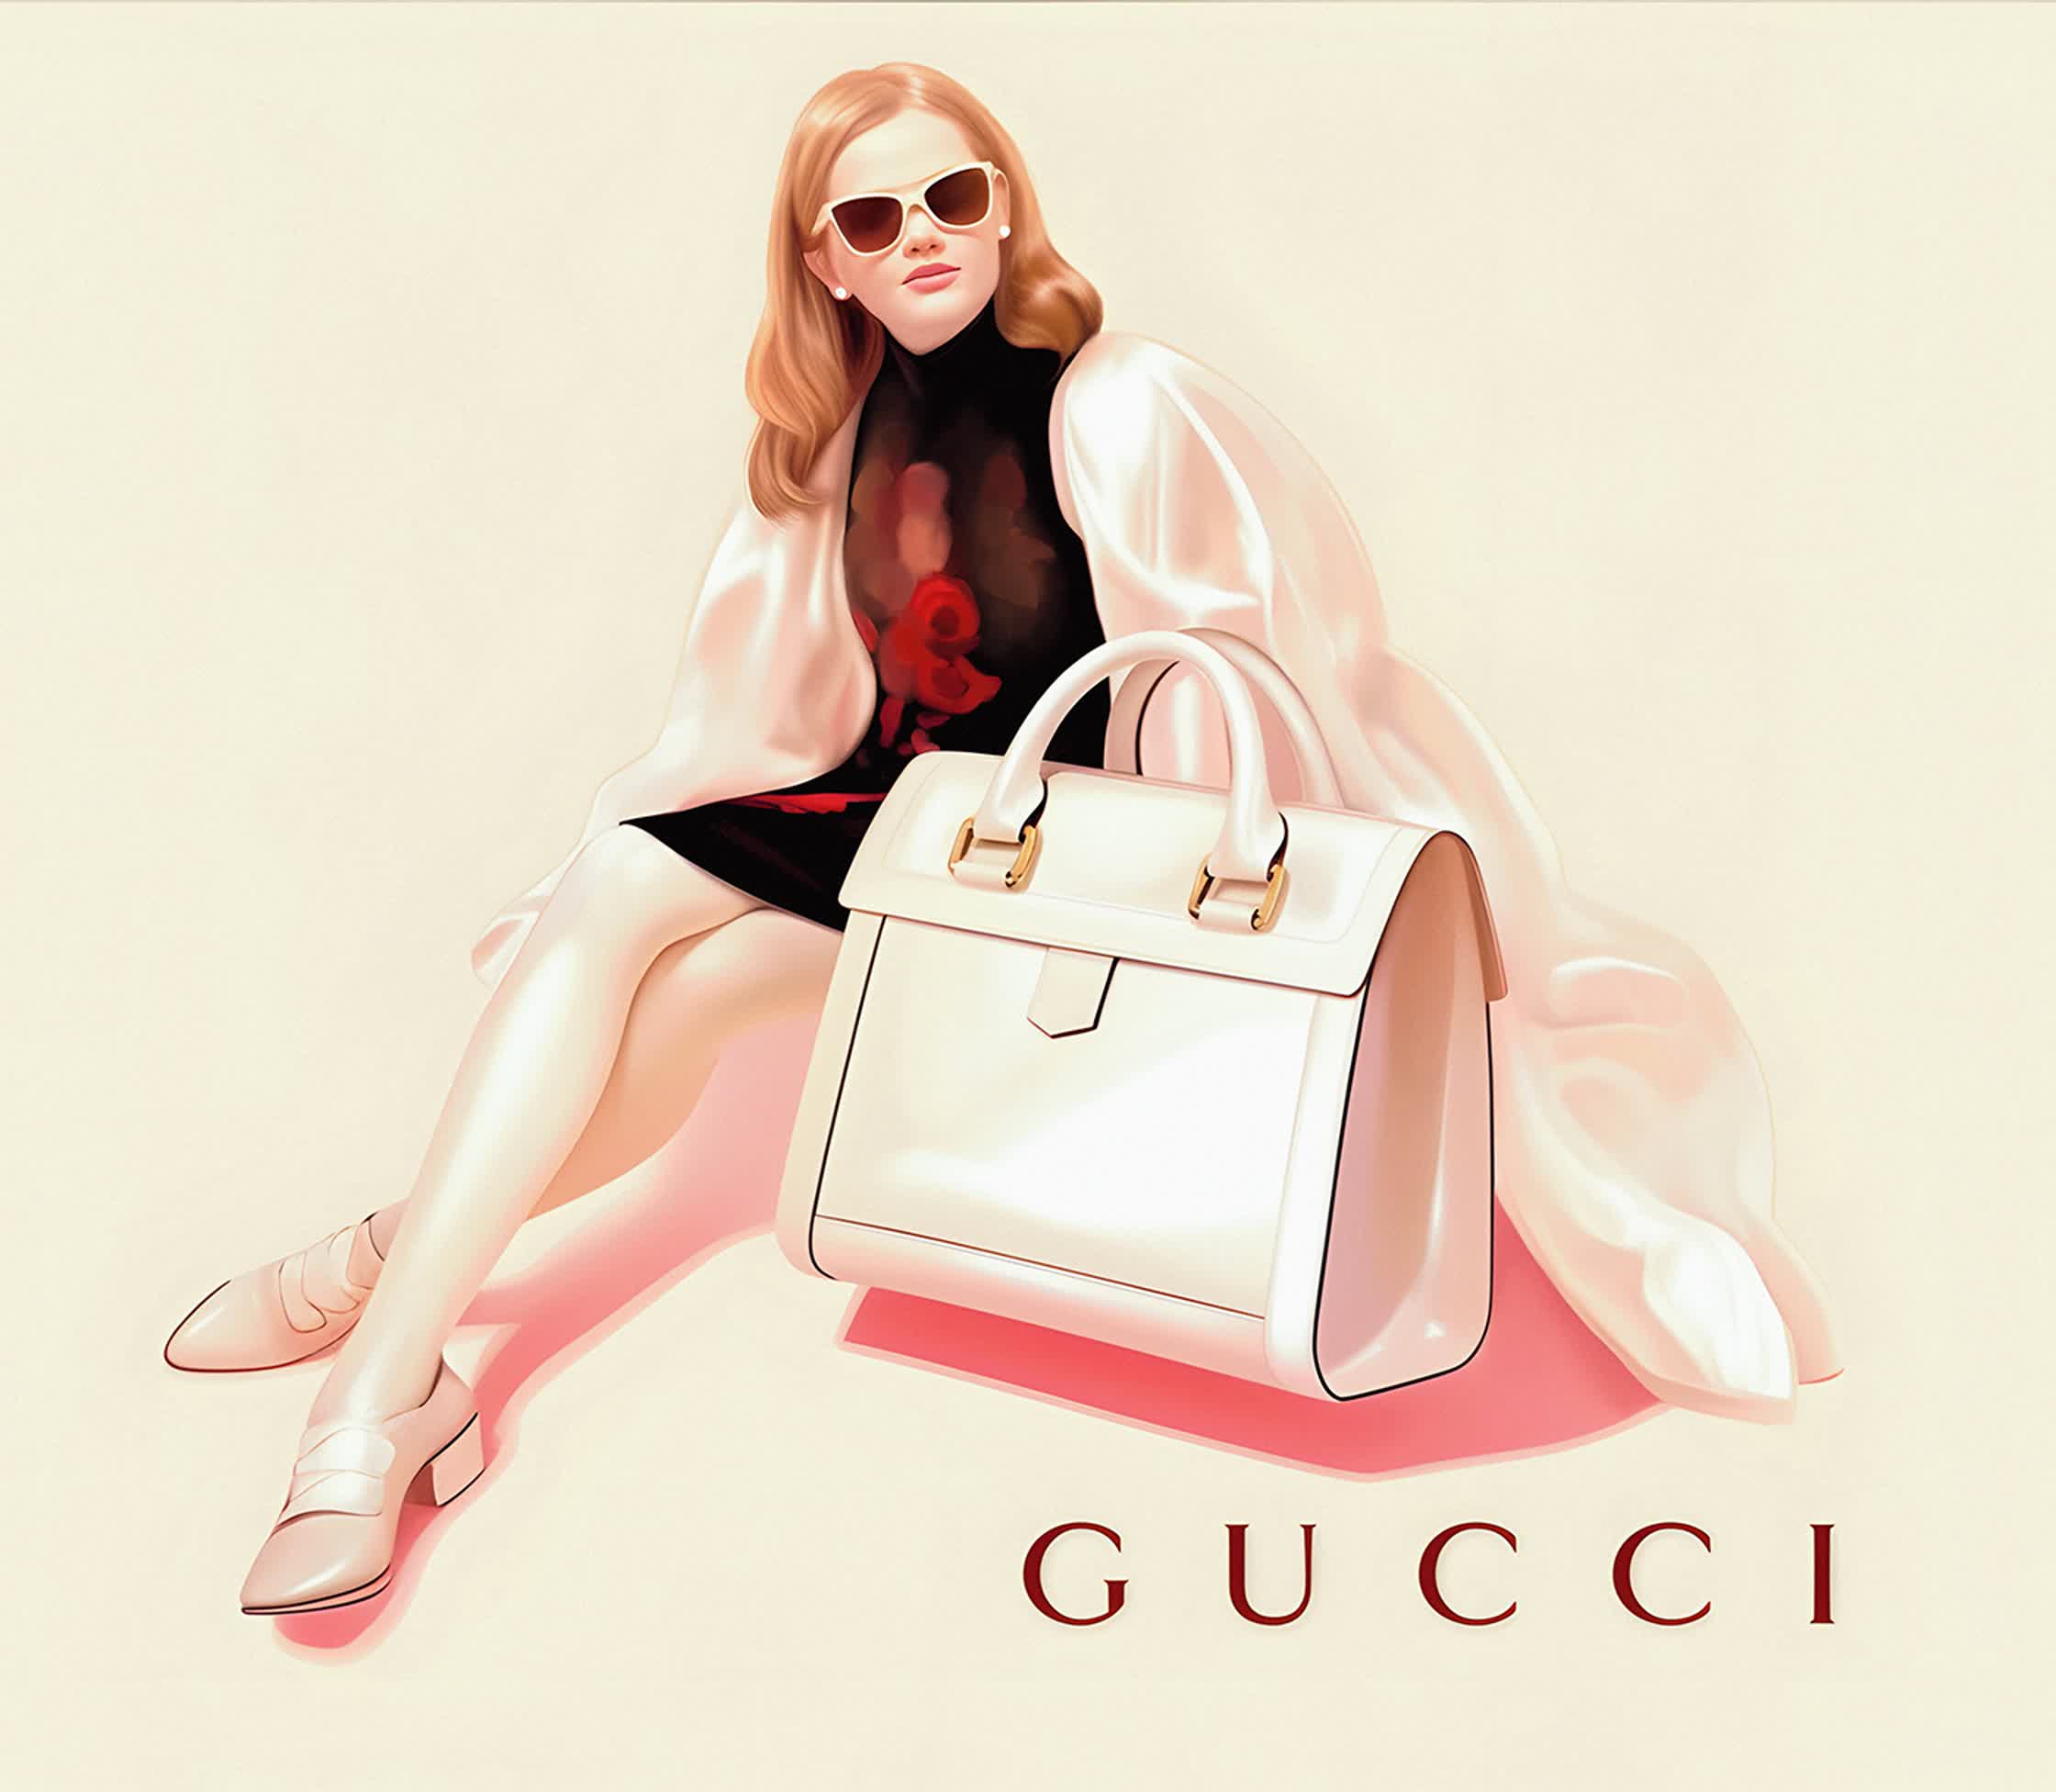 Gucci copy.jpg